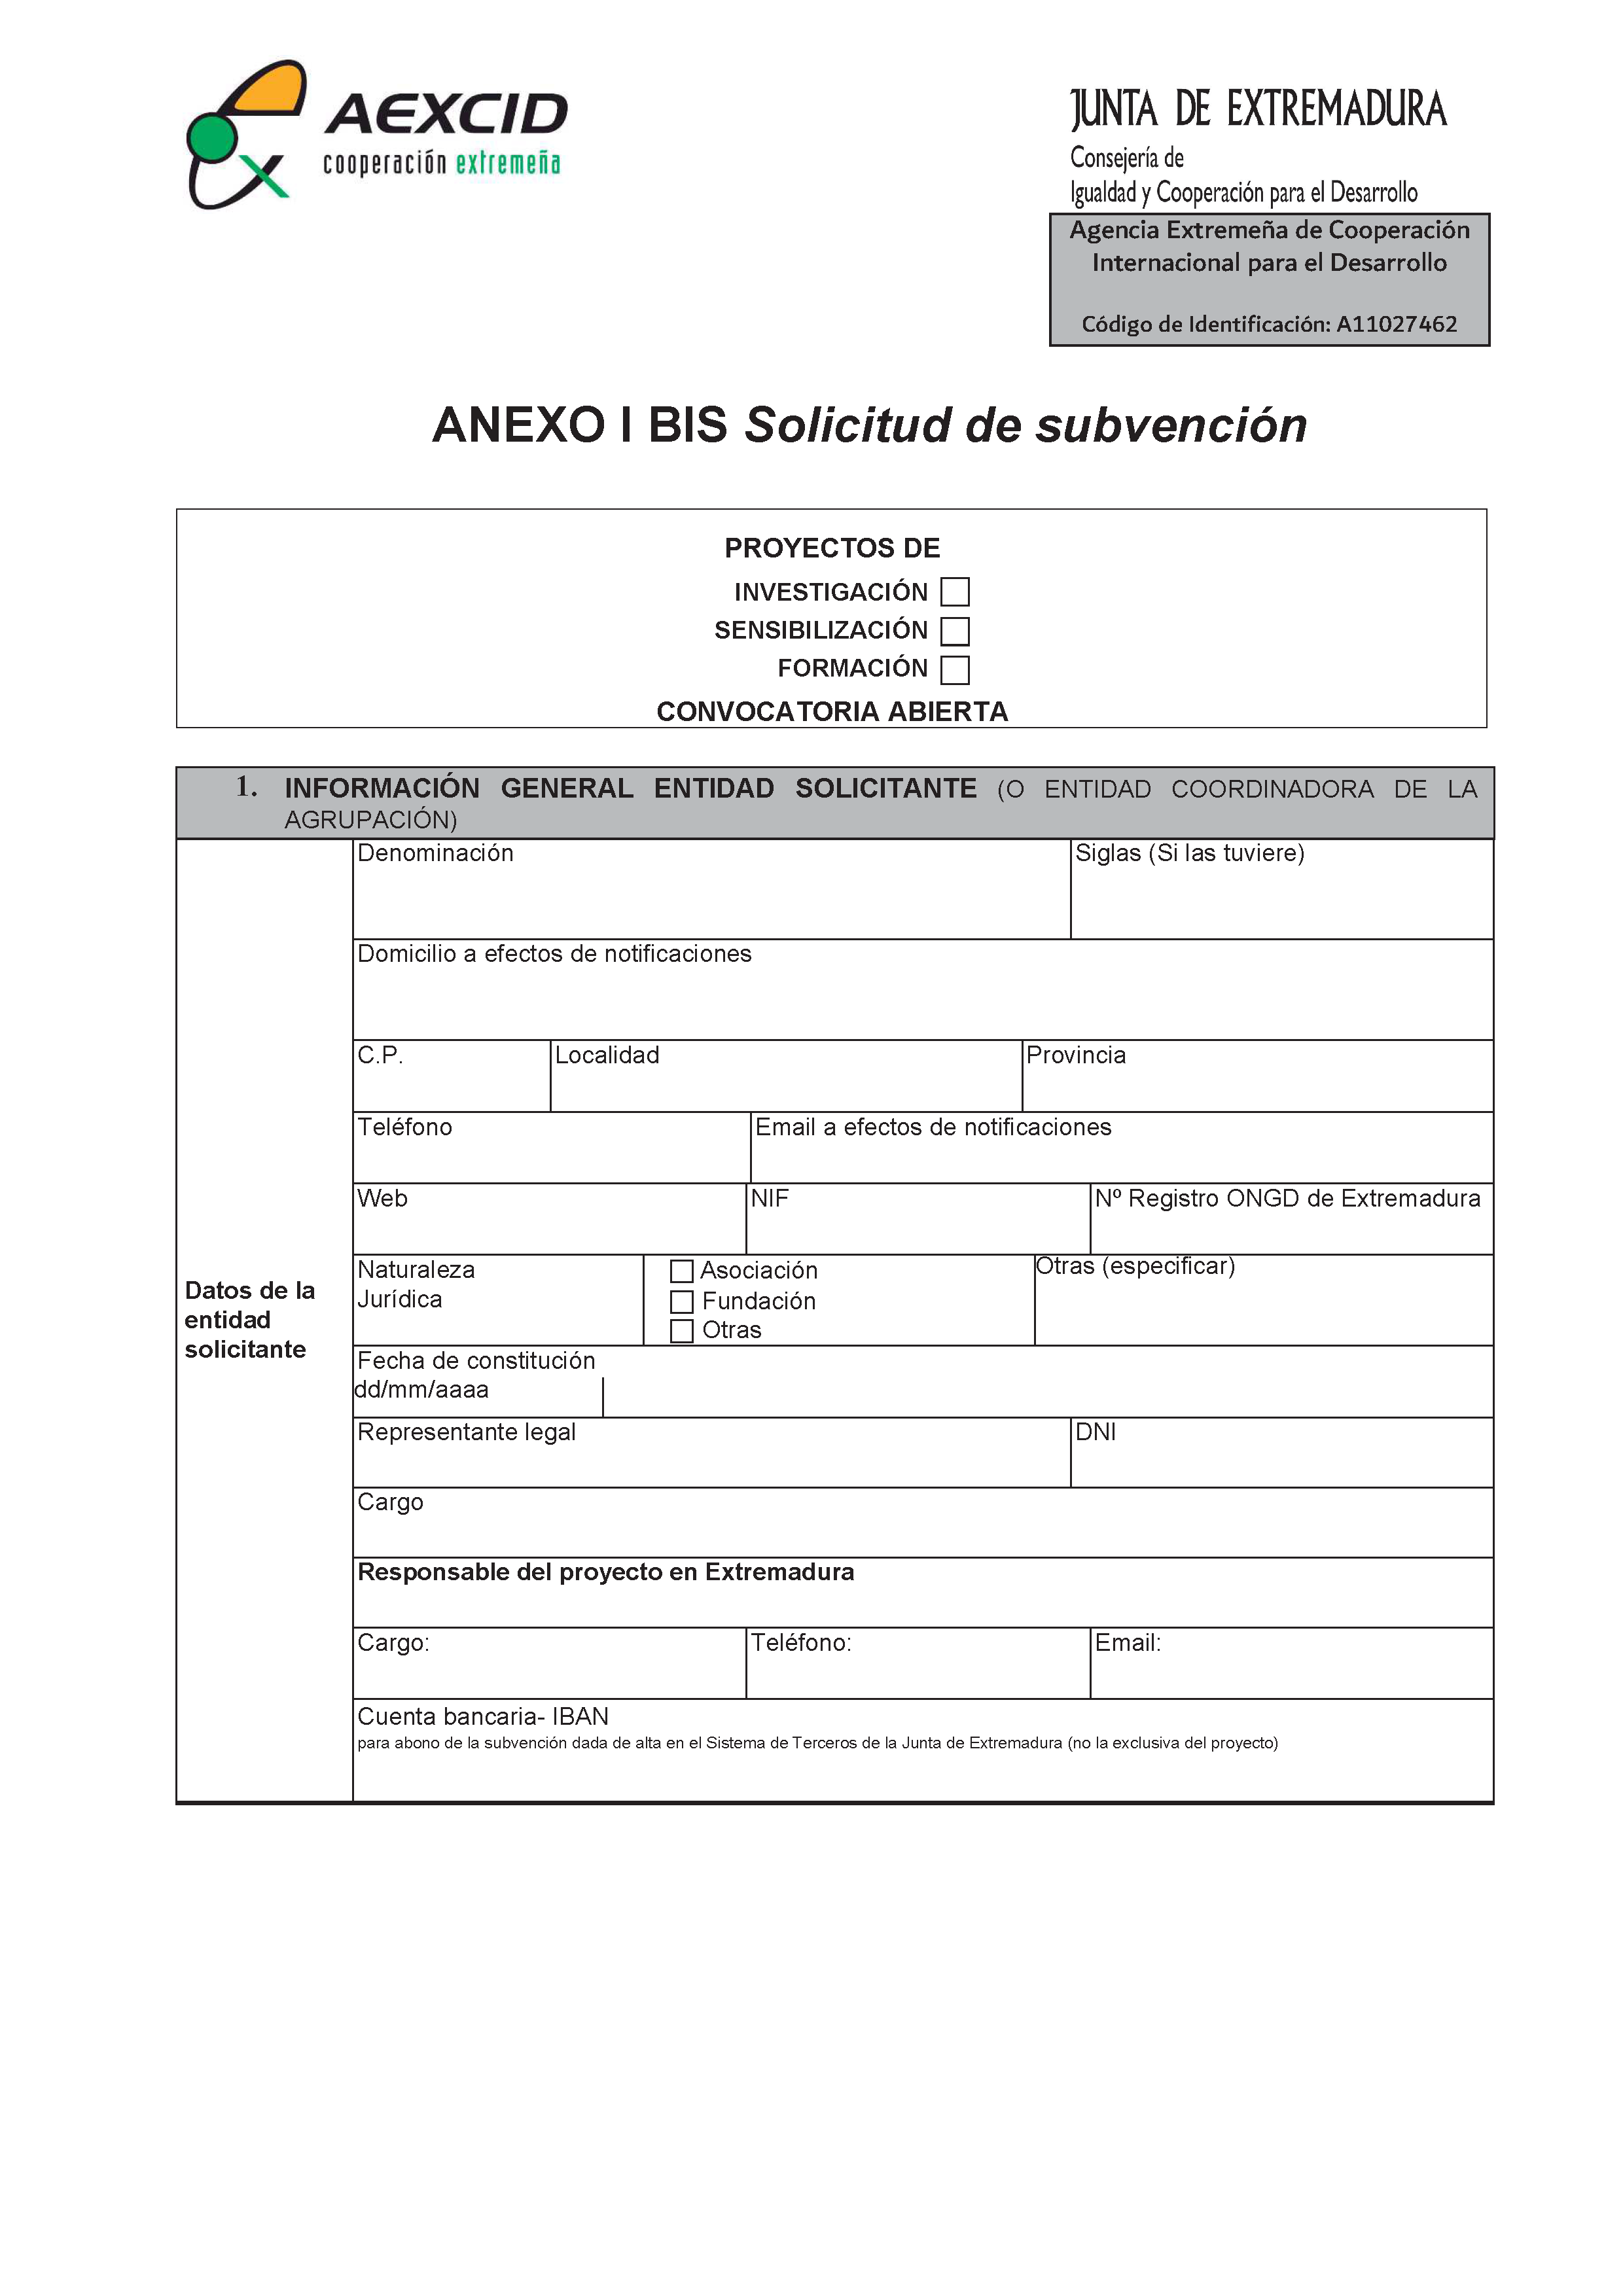 ANEXO I BIS SOLICITUD DE SUBVENCION Pag 1